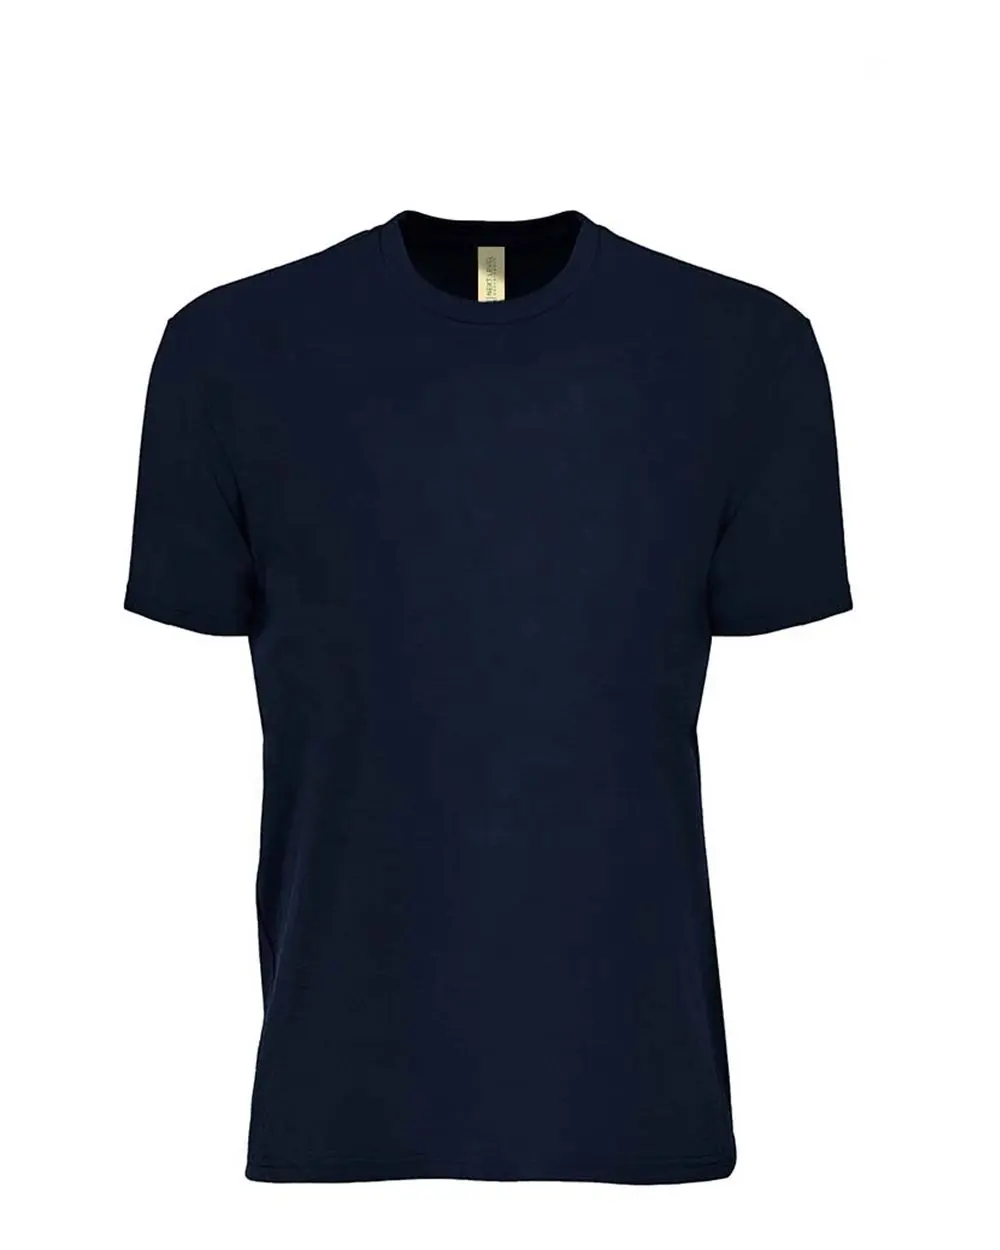 Tingkat Berikutnya uniseks kinerja ramah lingkungan tengah malam T-Shirt biru dongker desain klasik Logo Tee antisusut uniseks kaus sejuk